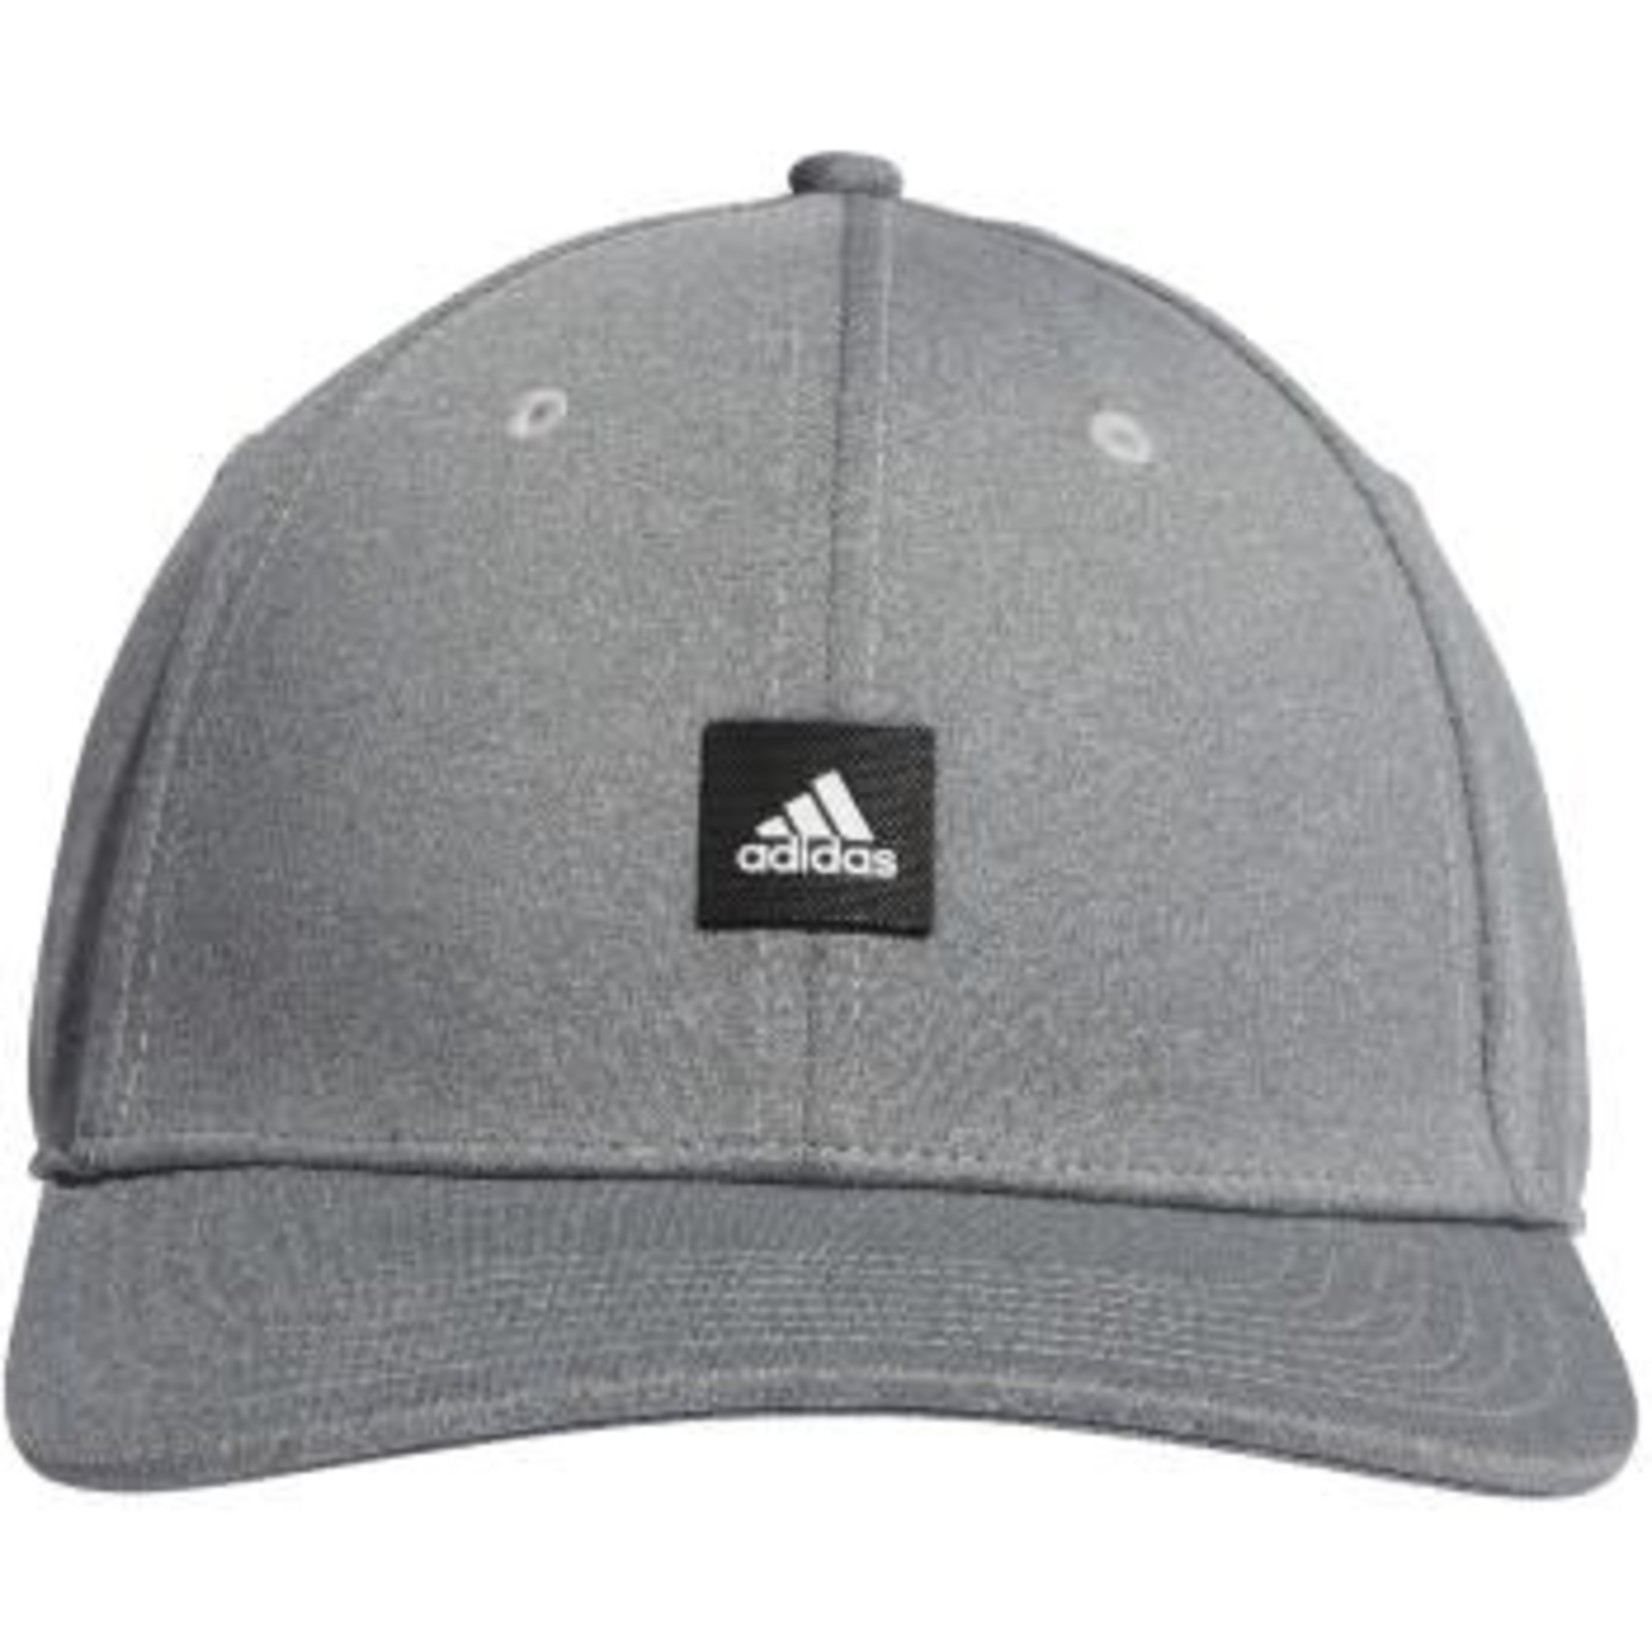 Adidas Heather Patch Hat